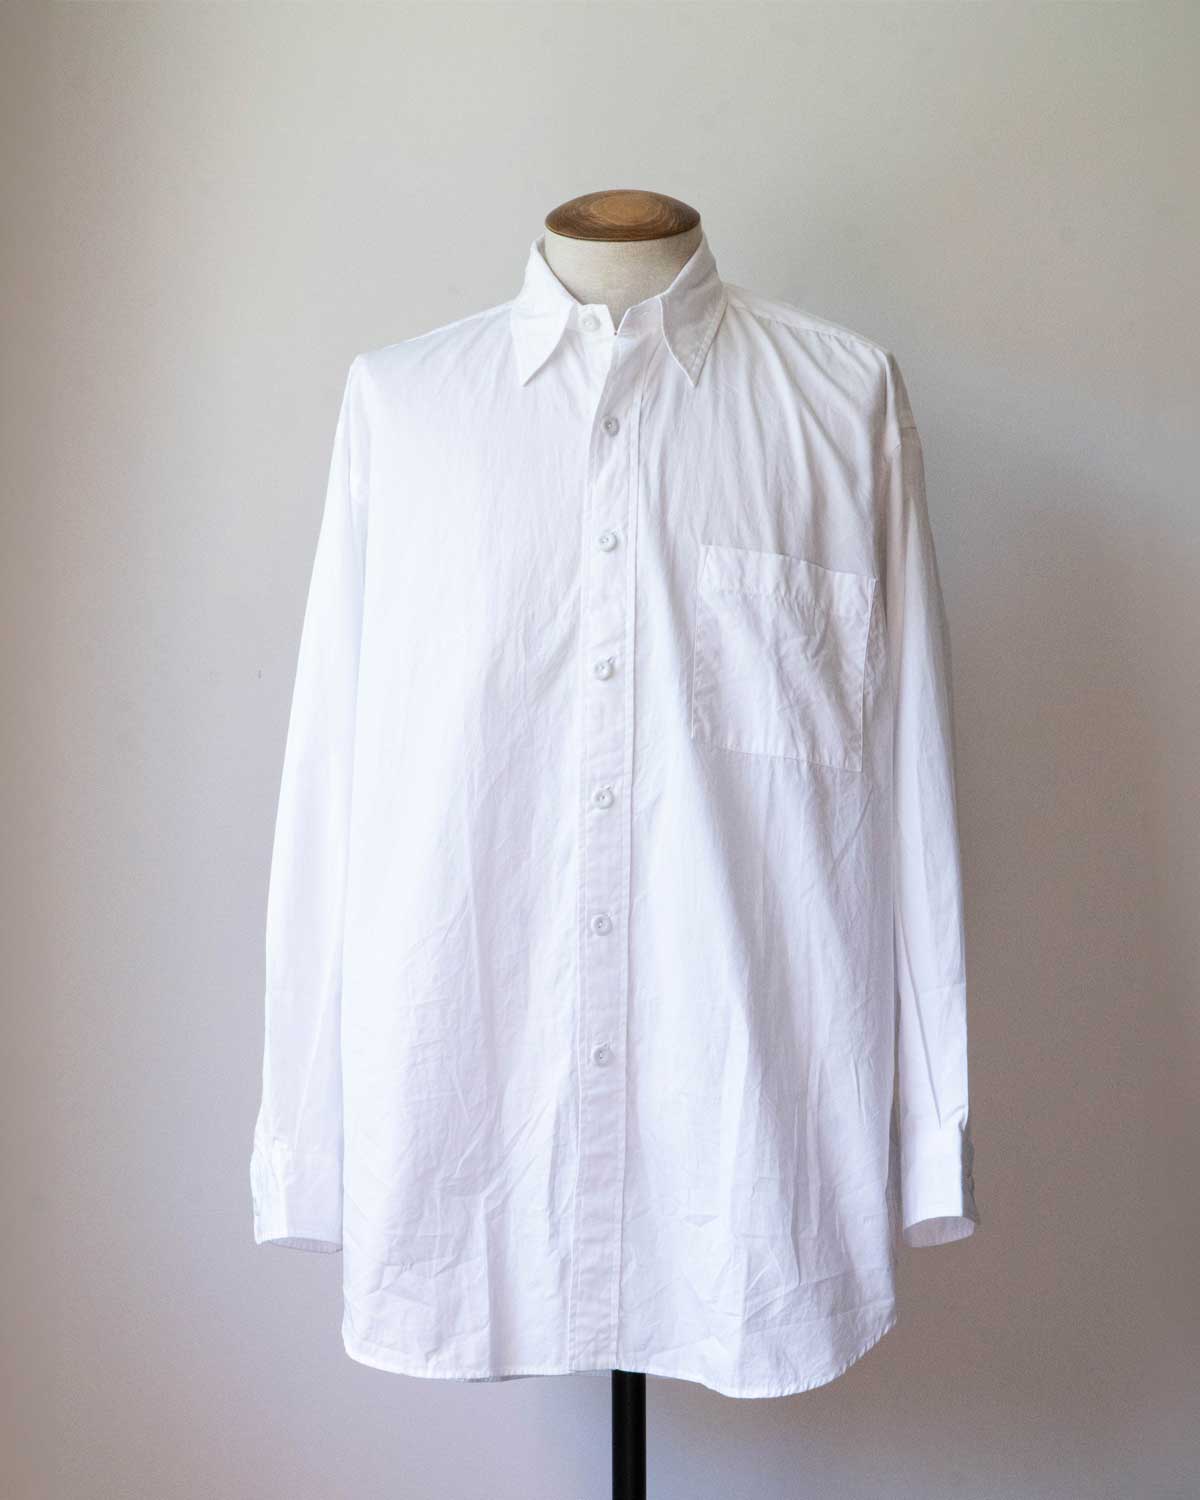 sowbow shirts type G cotton/silk